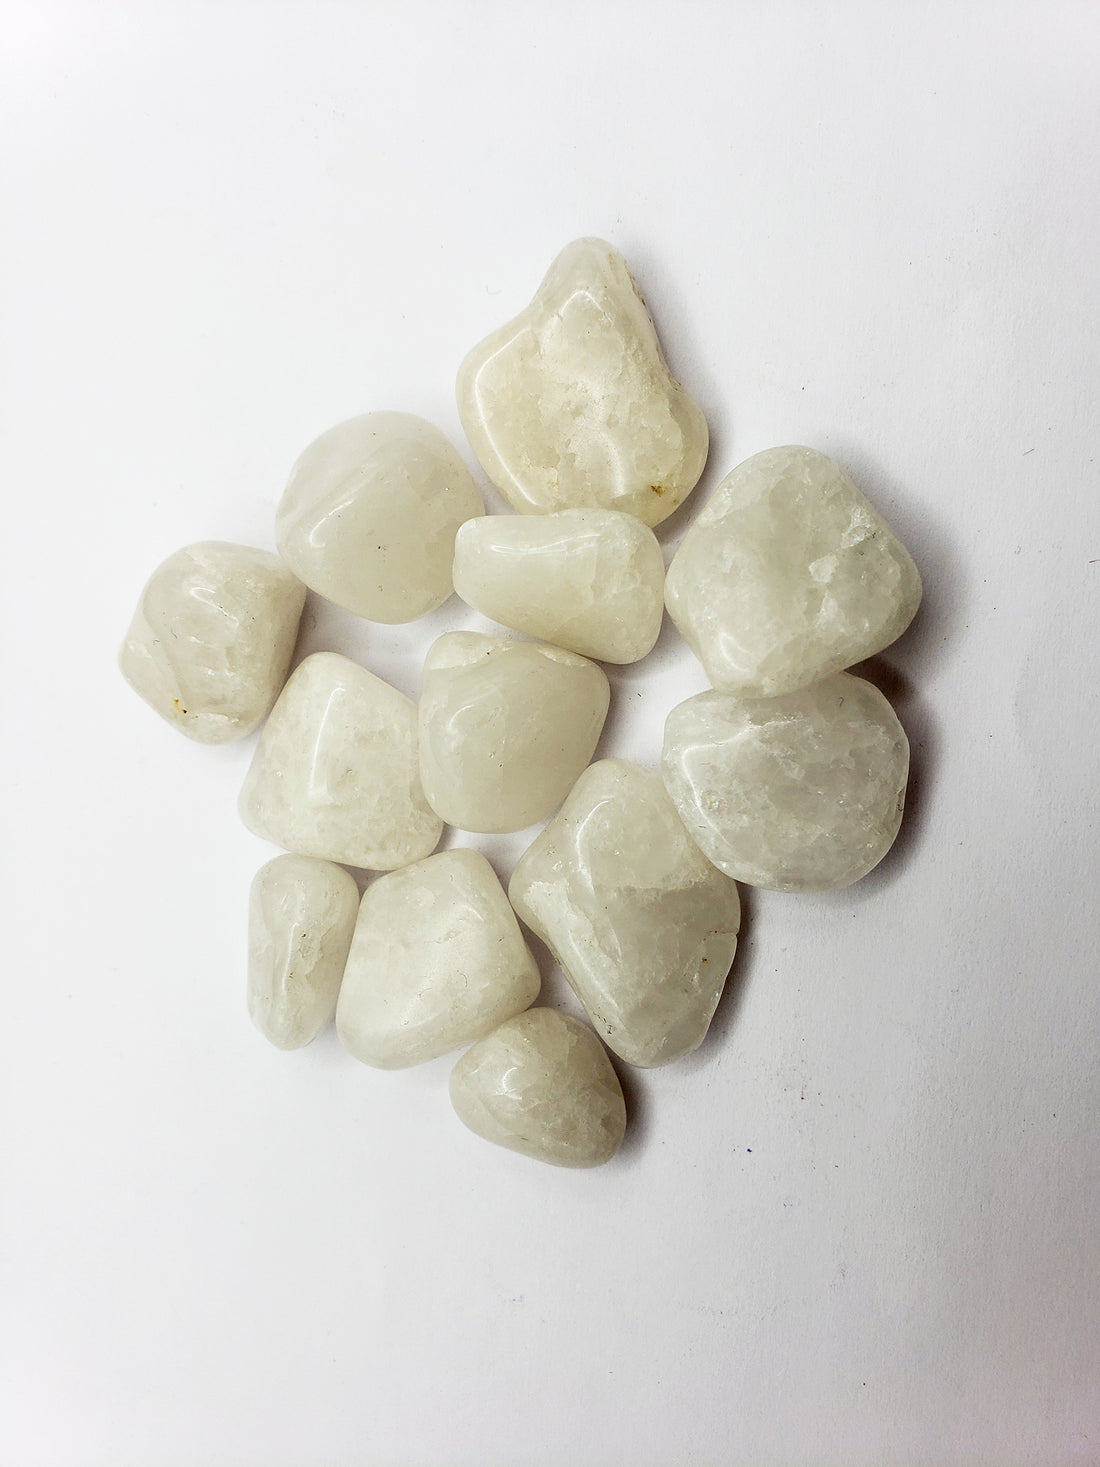 milky quartz stones on white background